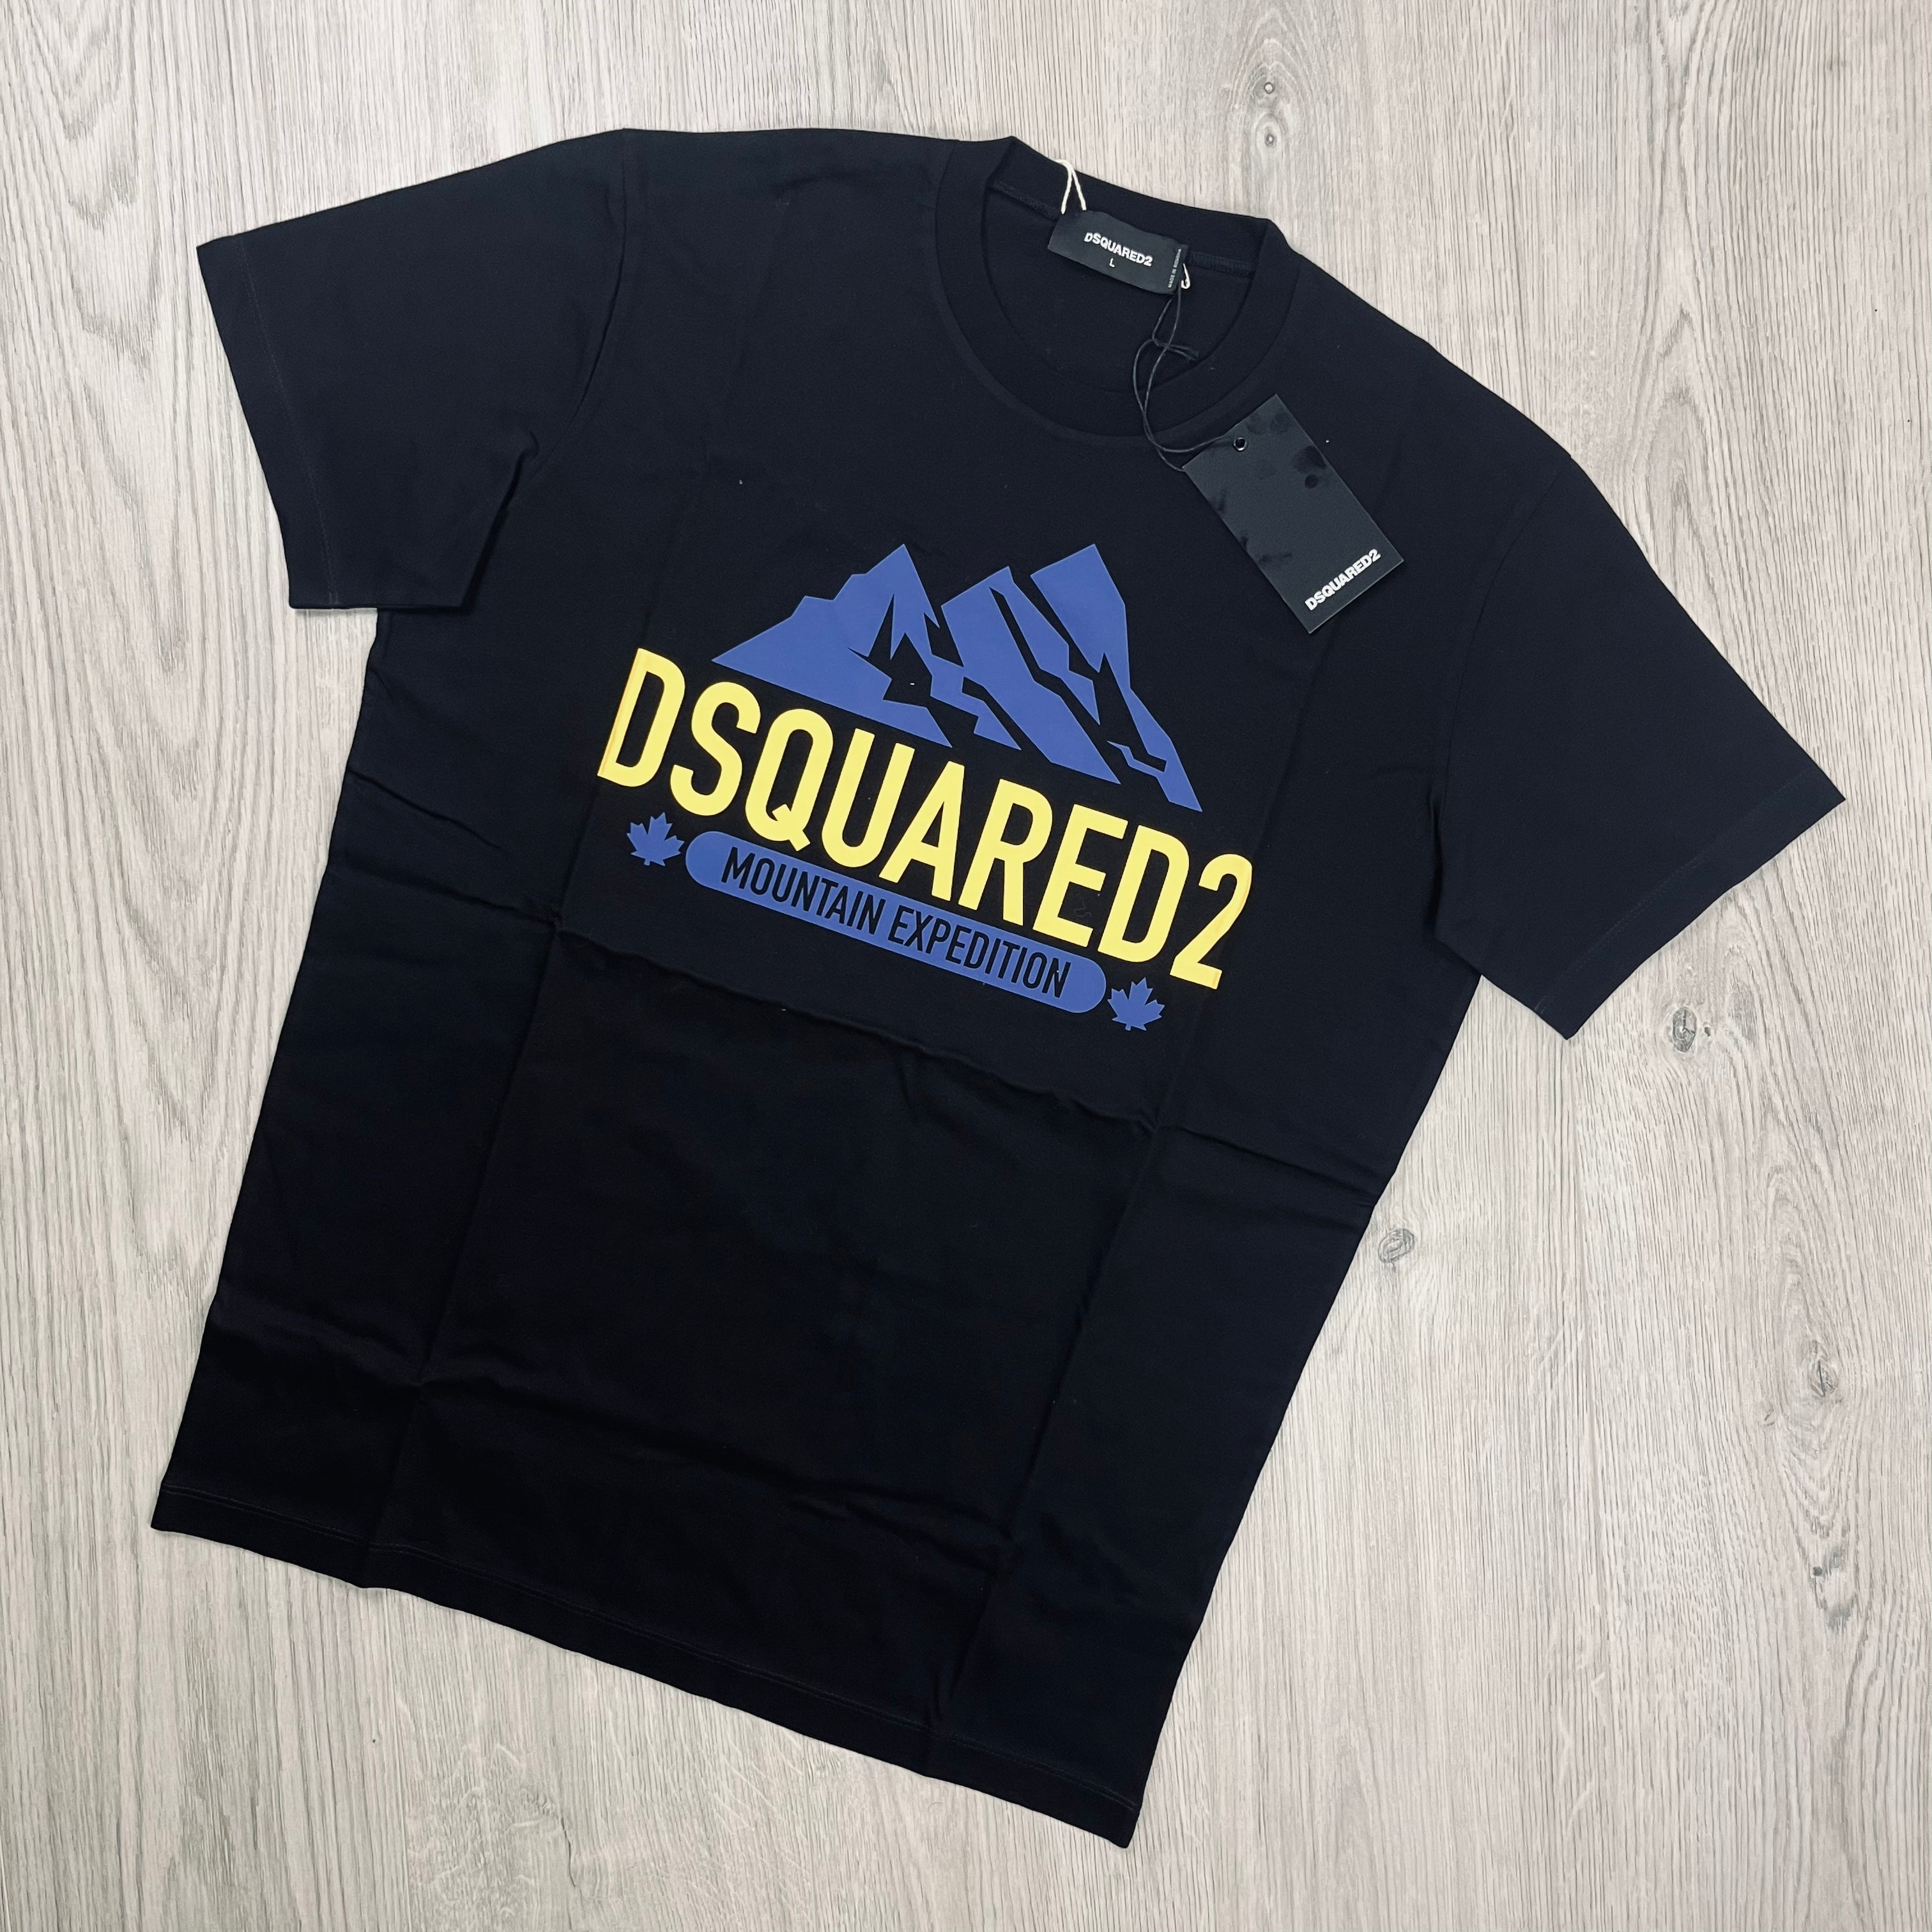 DSQUARED2 Mountain T-Shirt